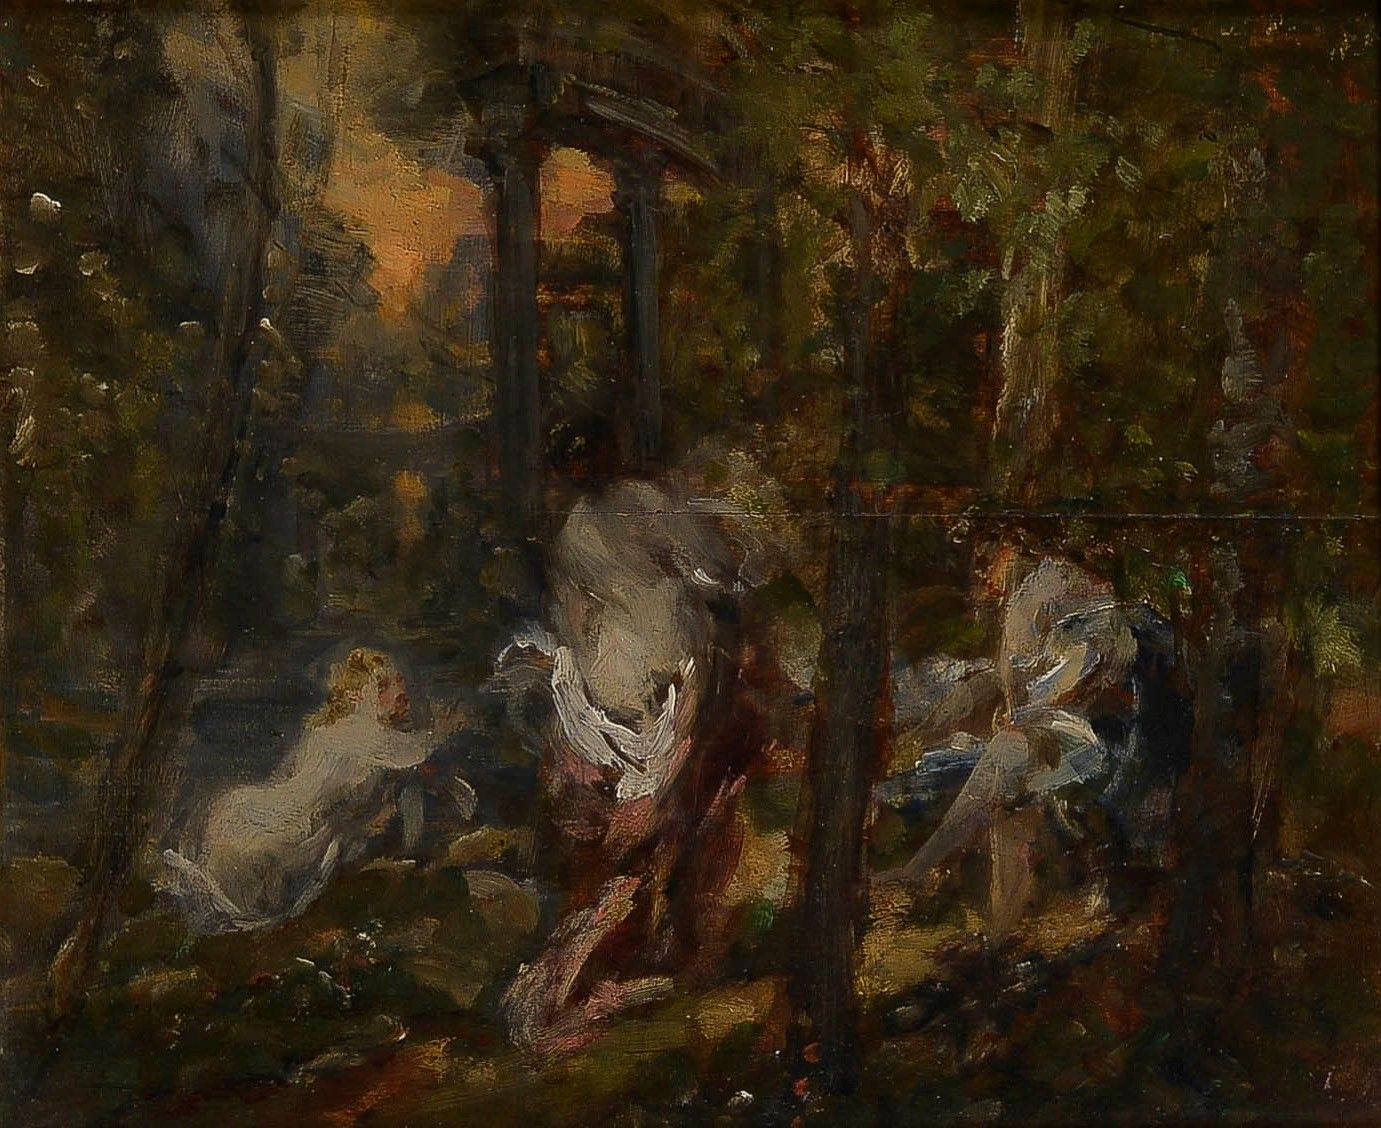 Null 约瑟夫-吉夏尔 (1806-1880)

树林中的沐浴者

板上油彩

36,5 x 47,5 cm

裂缝